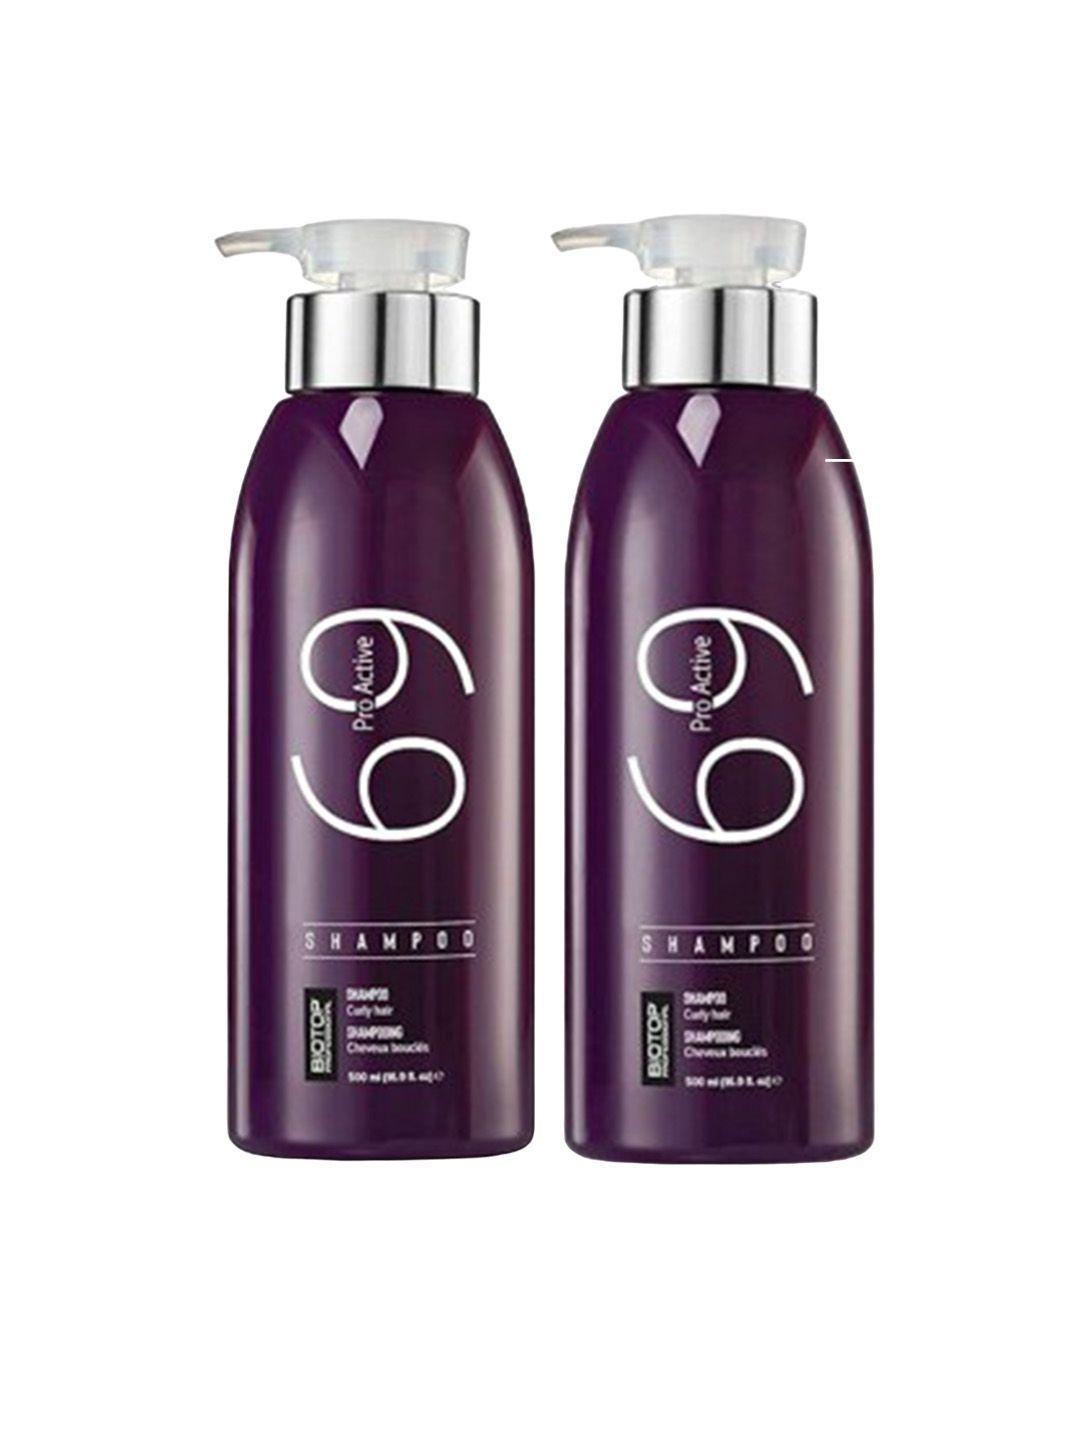 biotop professional 69 pro-active 2-pcs shampoo - 500ml each